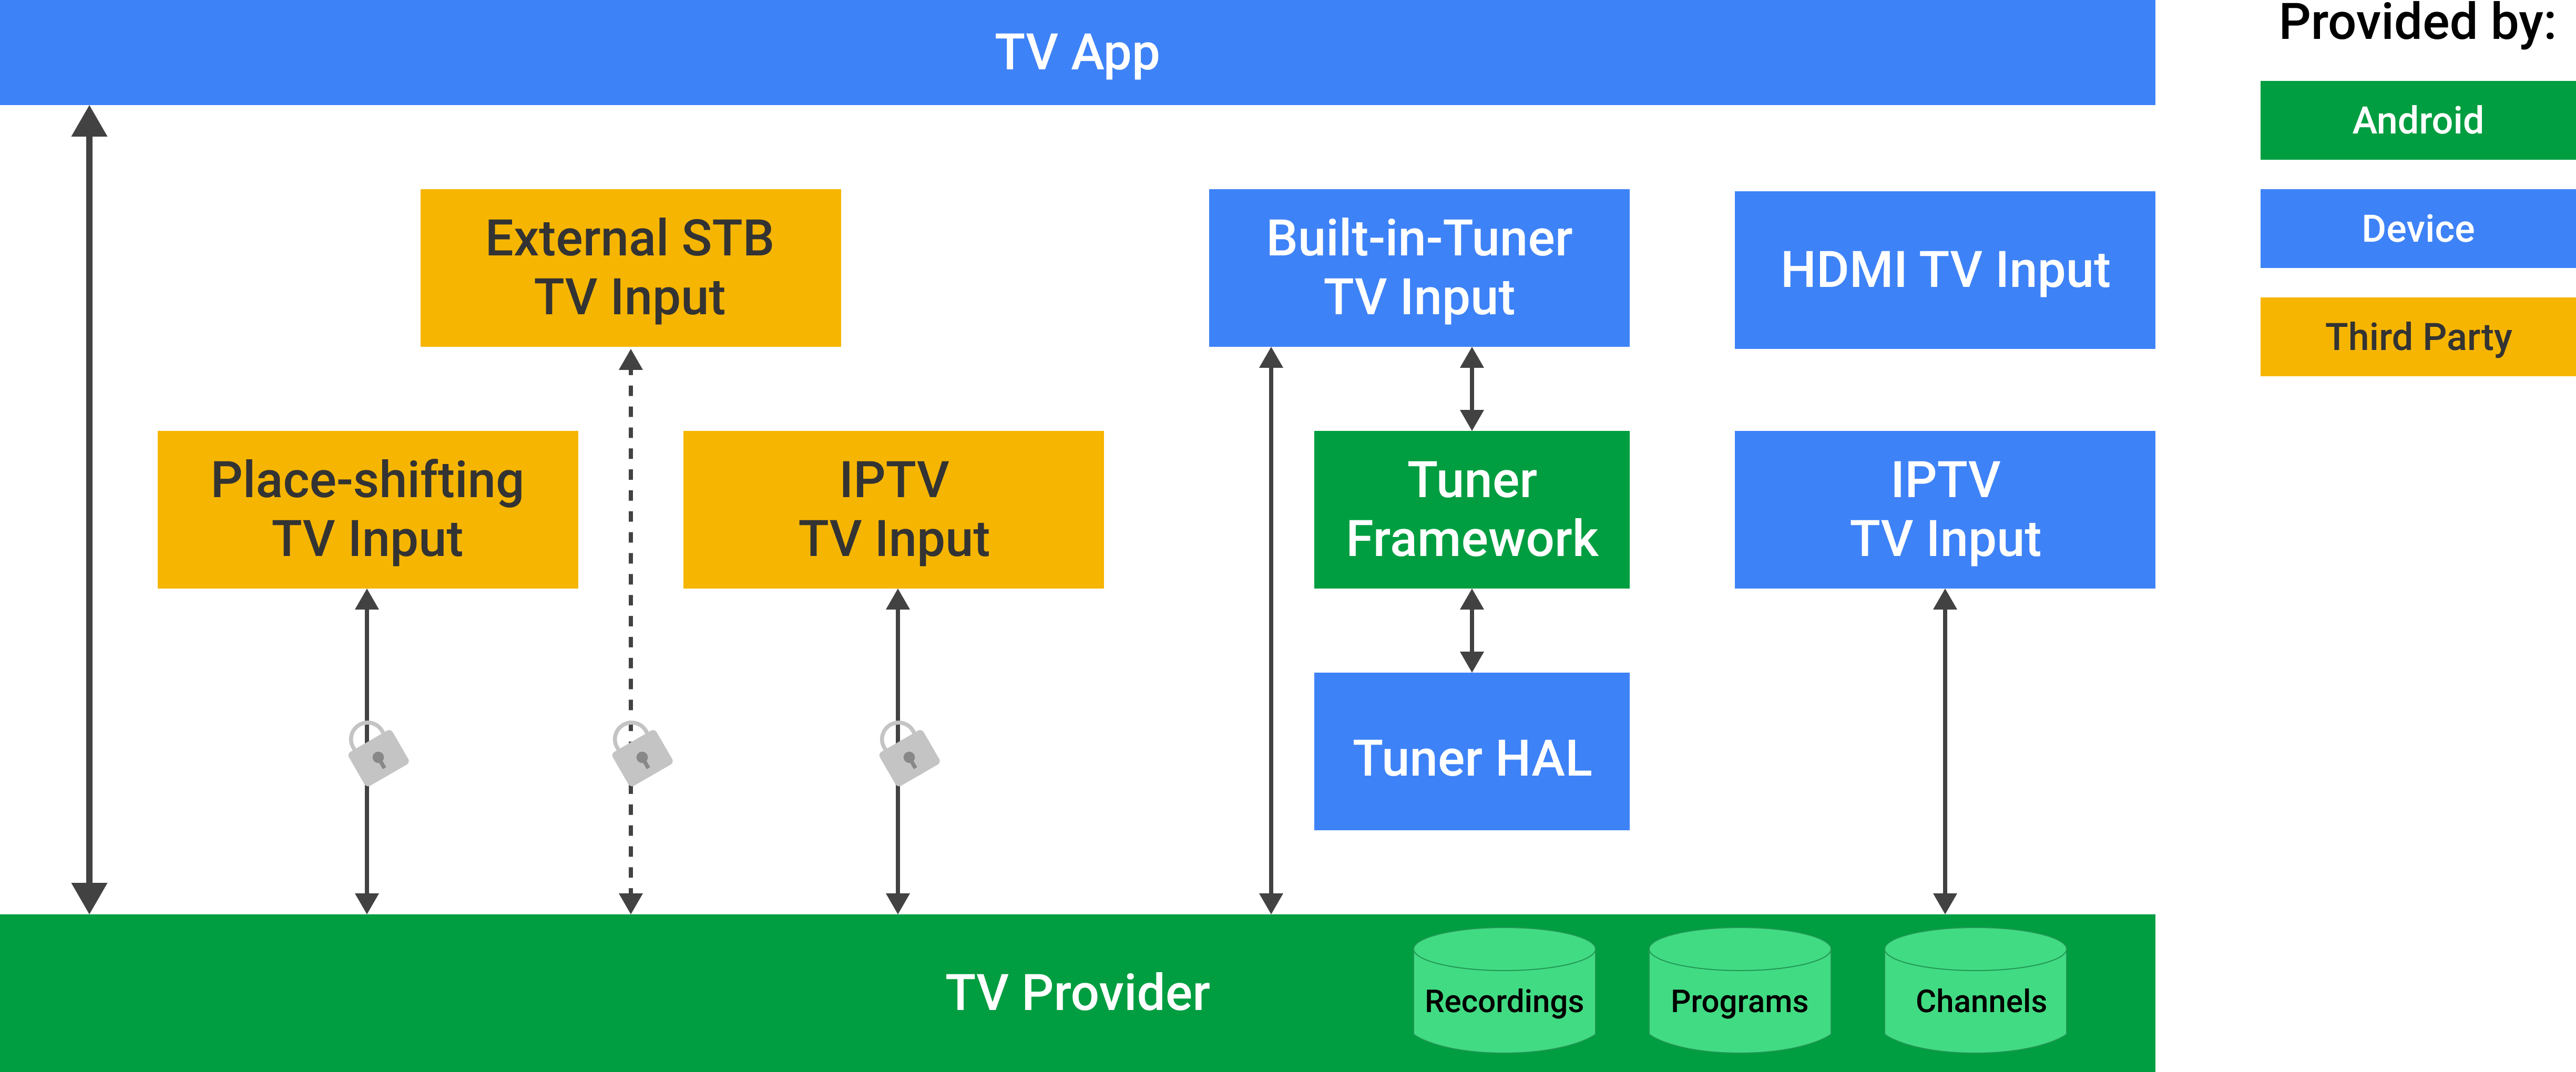 Android TV 서비스 제공업체